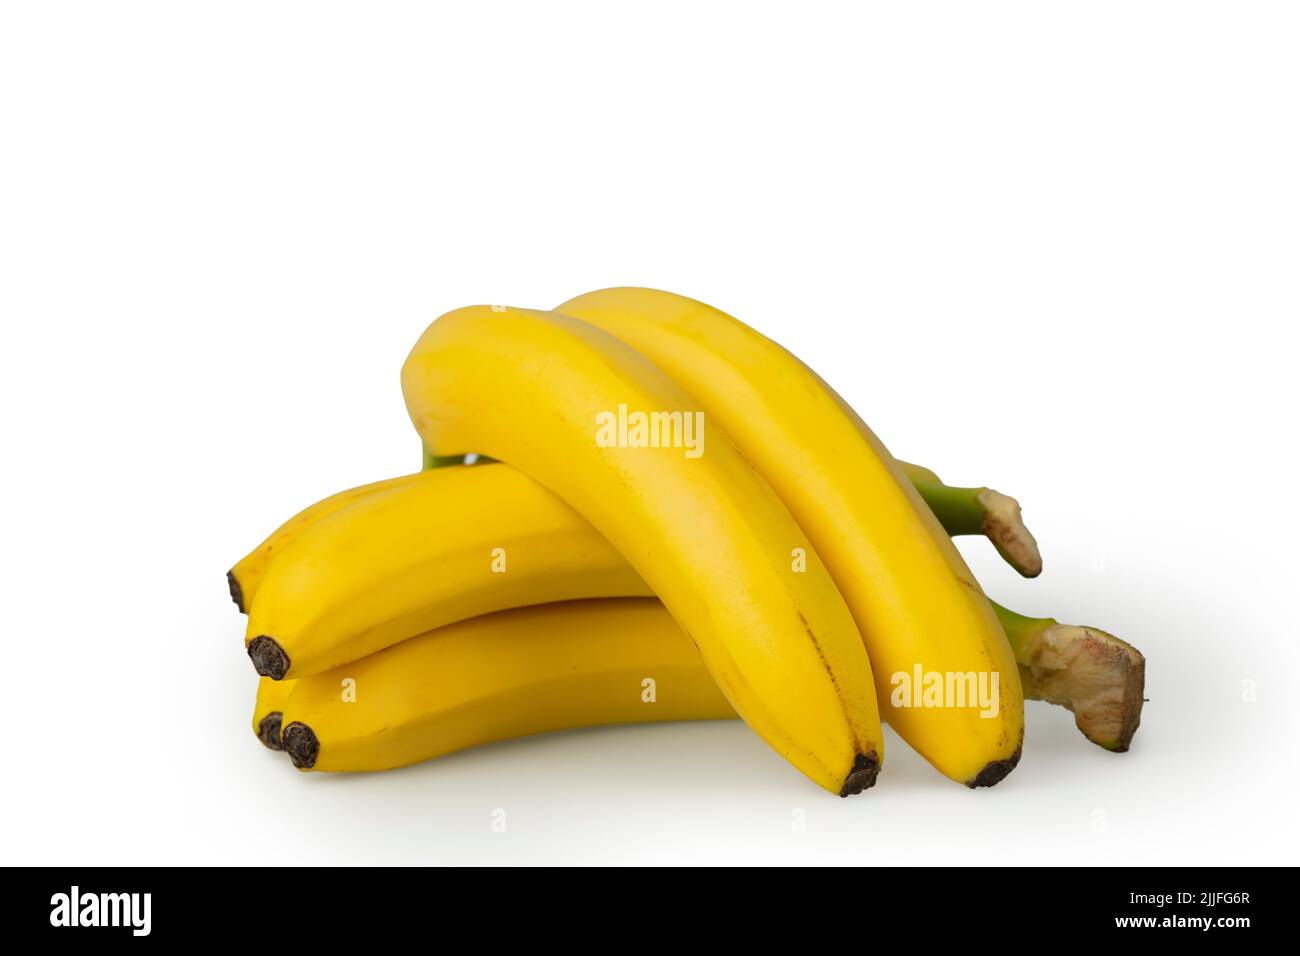 Bunch of fresh bananas isolated on white background - stock photo Stock Photo